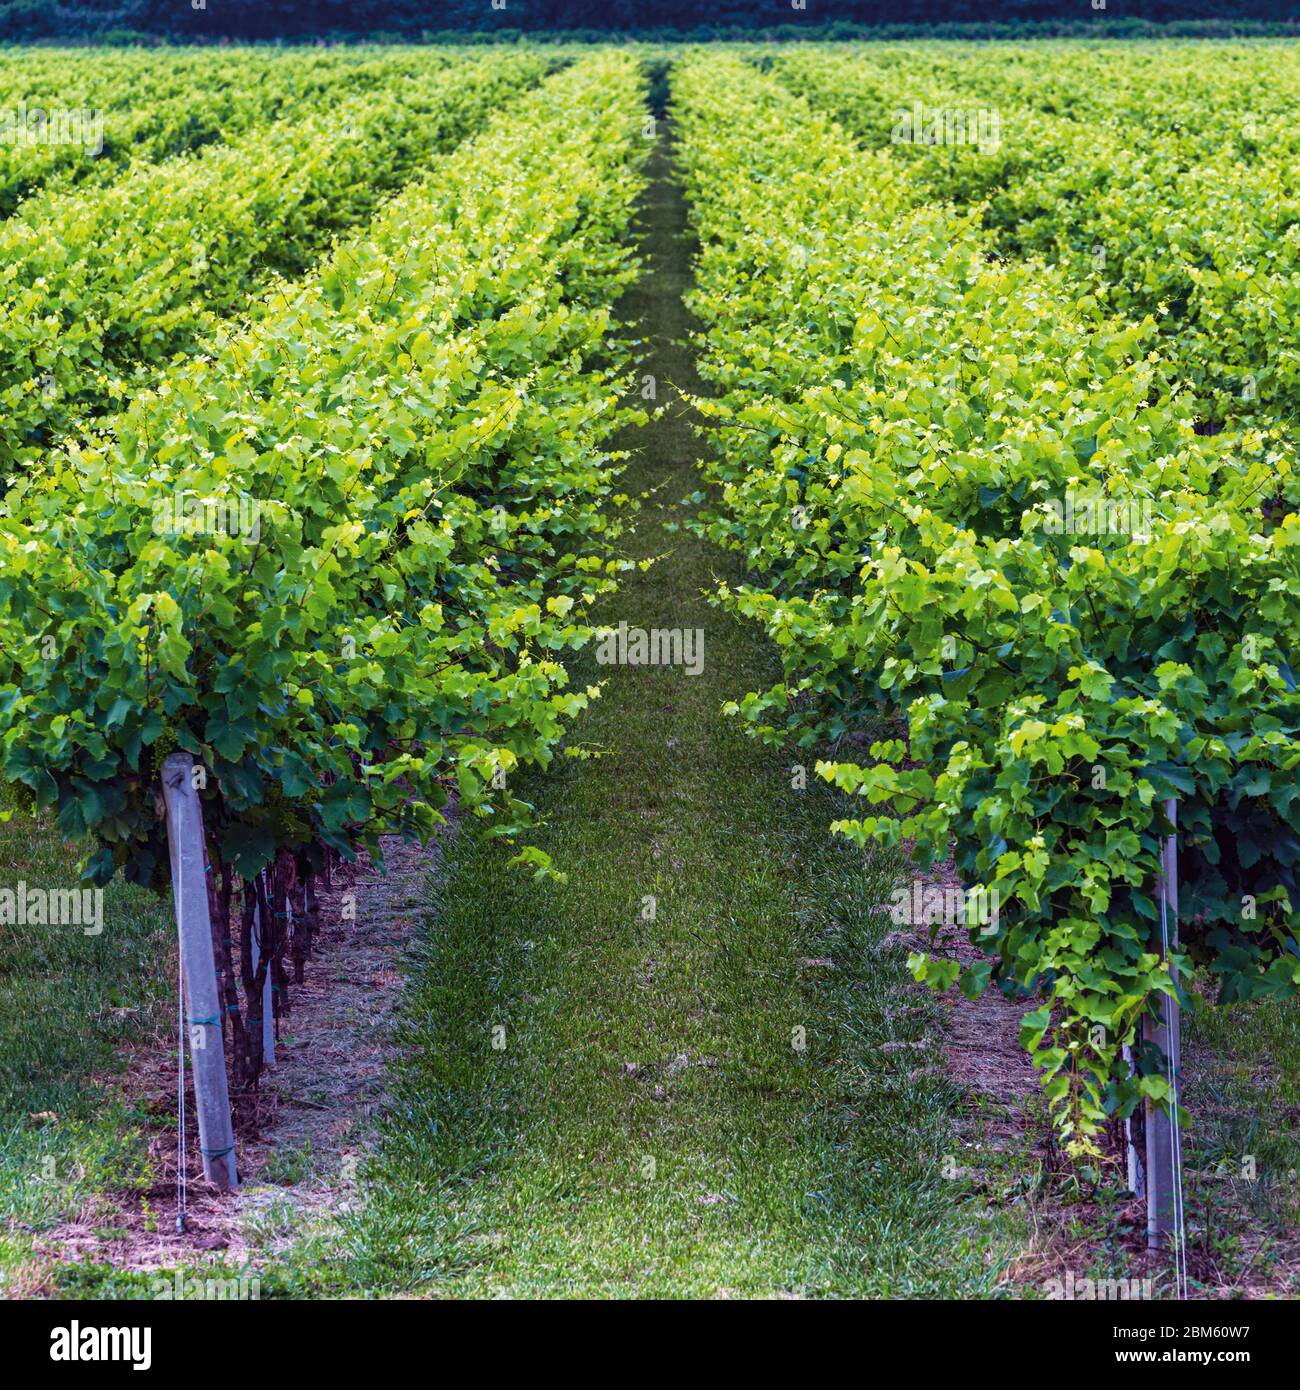 Vines growing near Casali Franceschinis, Udine Province, Italy. Stock Photo